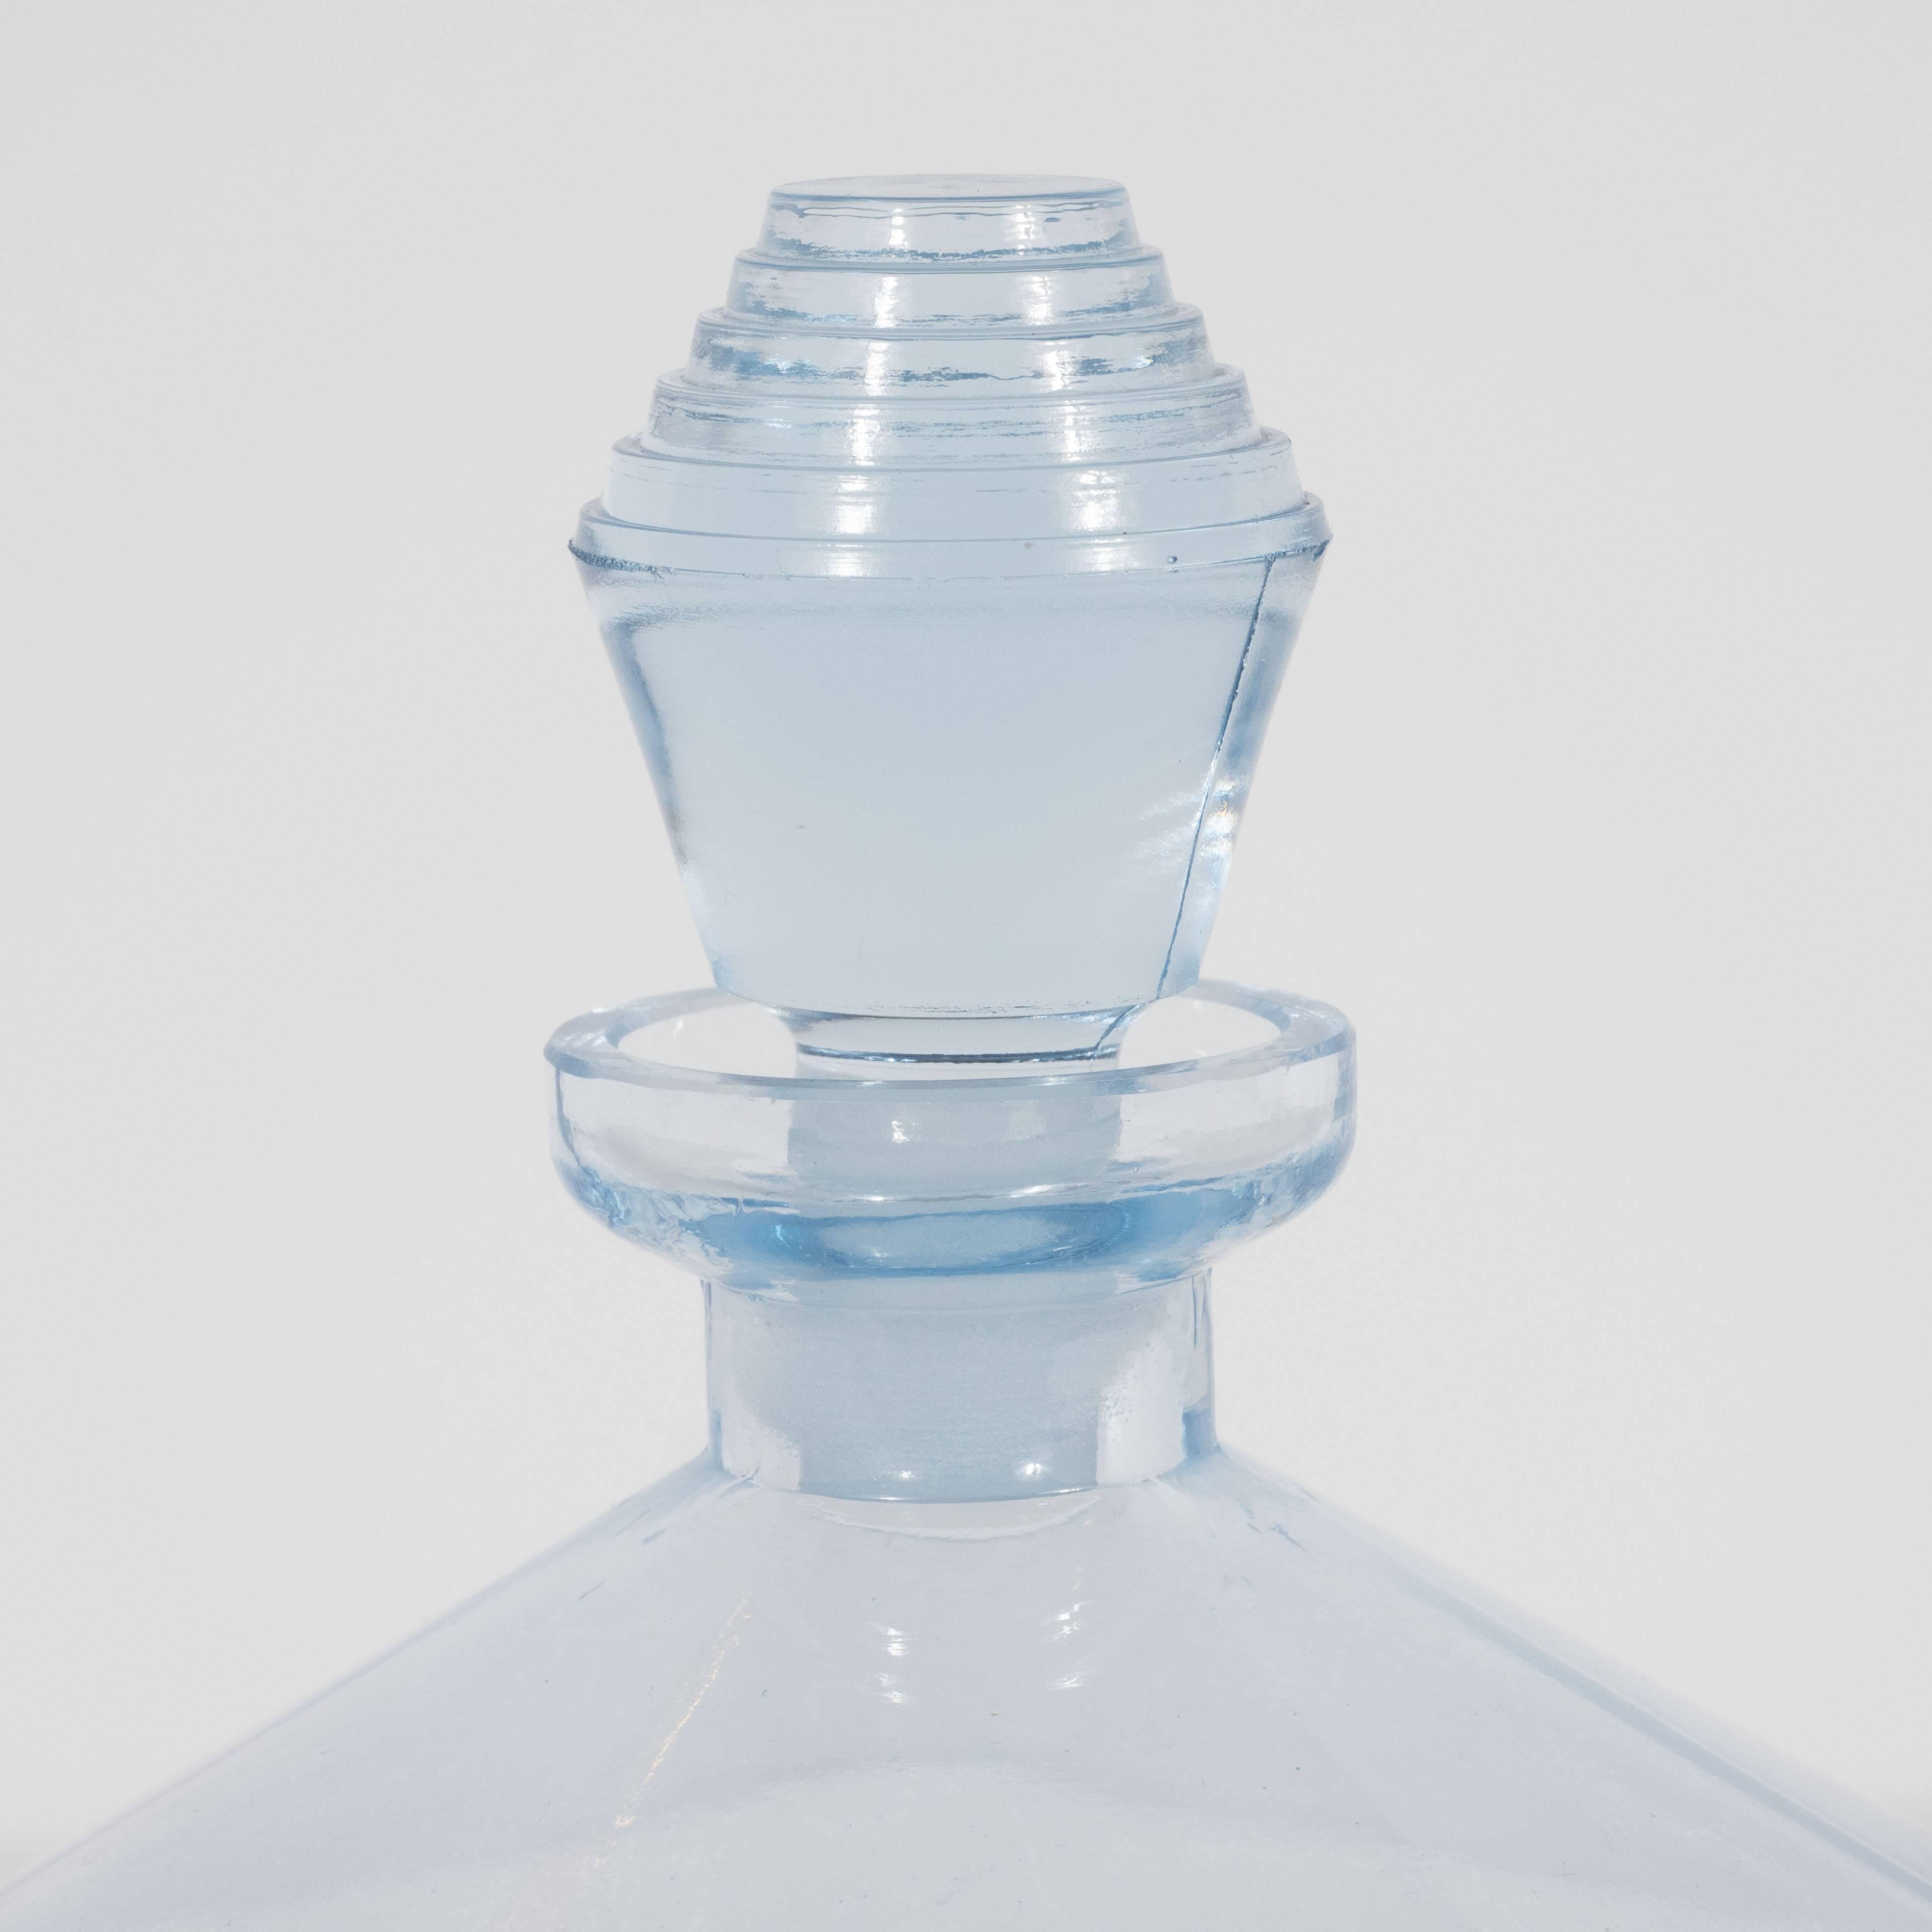 Czech Art Deco Skyscraper Style Perfume Bottle in Light Blue Translucent Glass 1